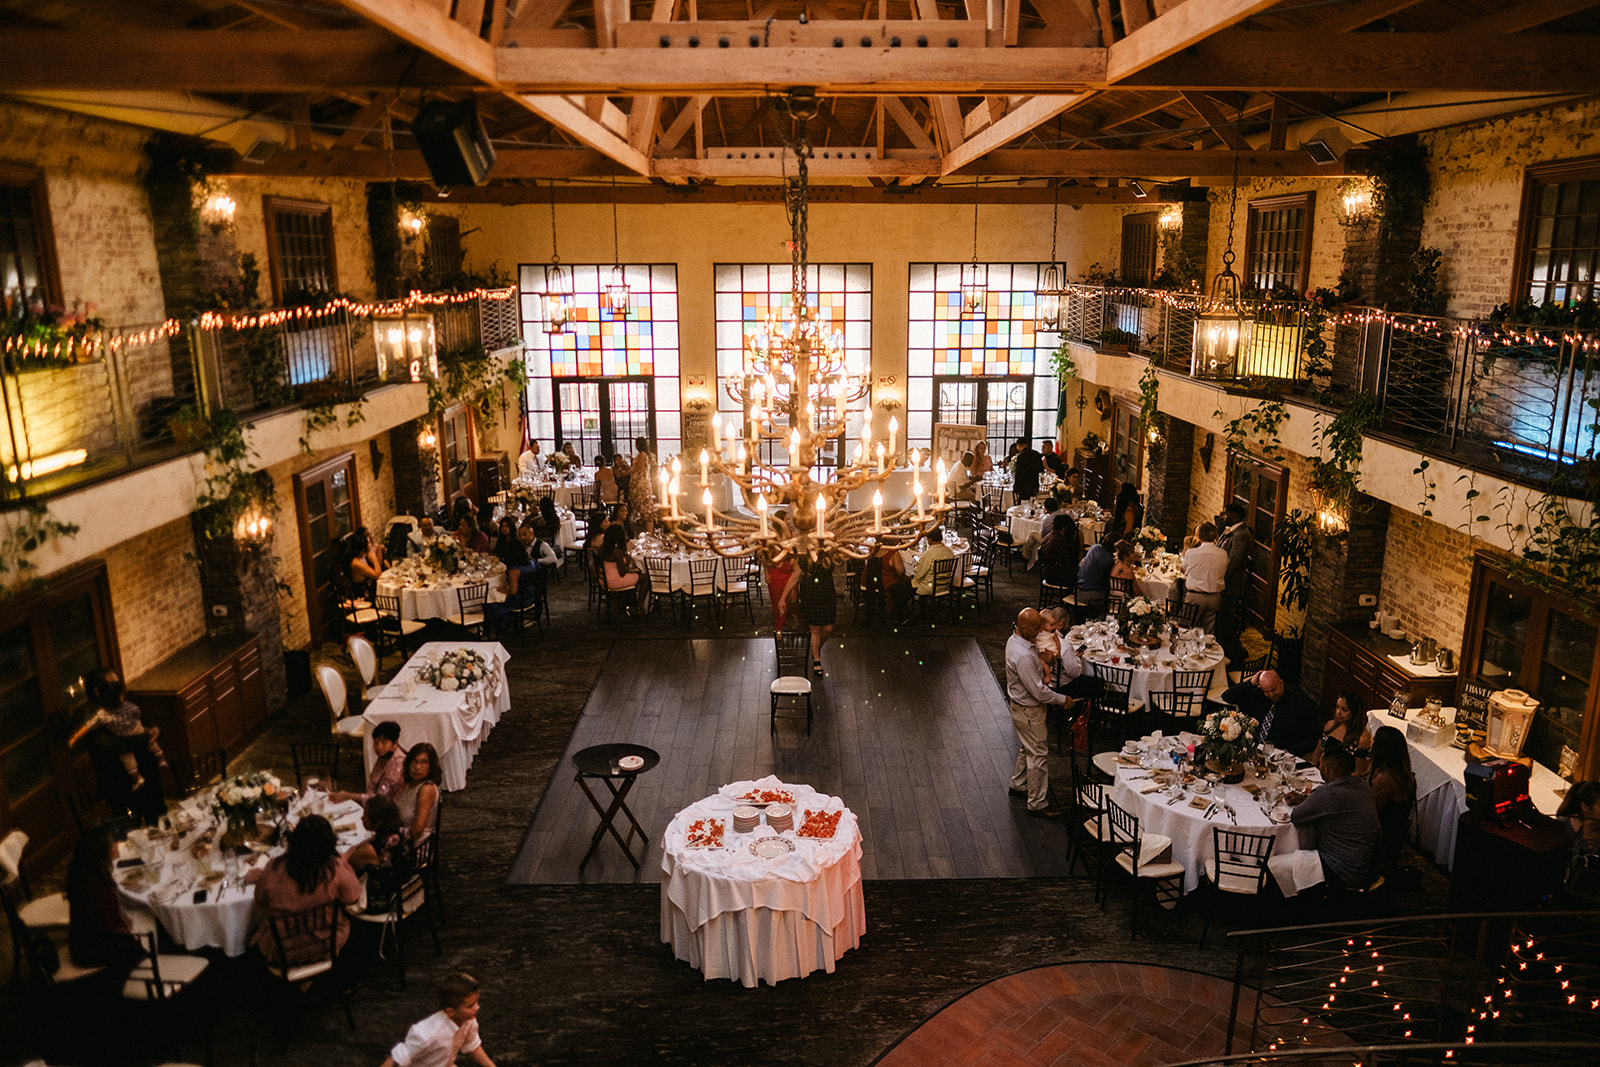 Palos Verdes Golf Course Wedding - Michael's Tuscany Room - San Pedro - Reception